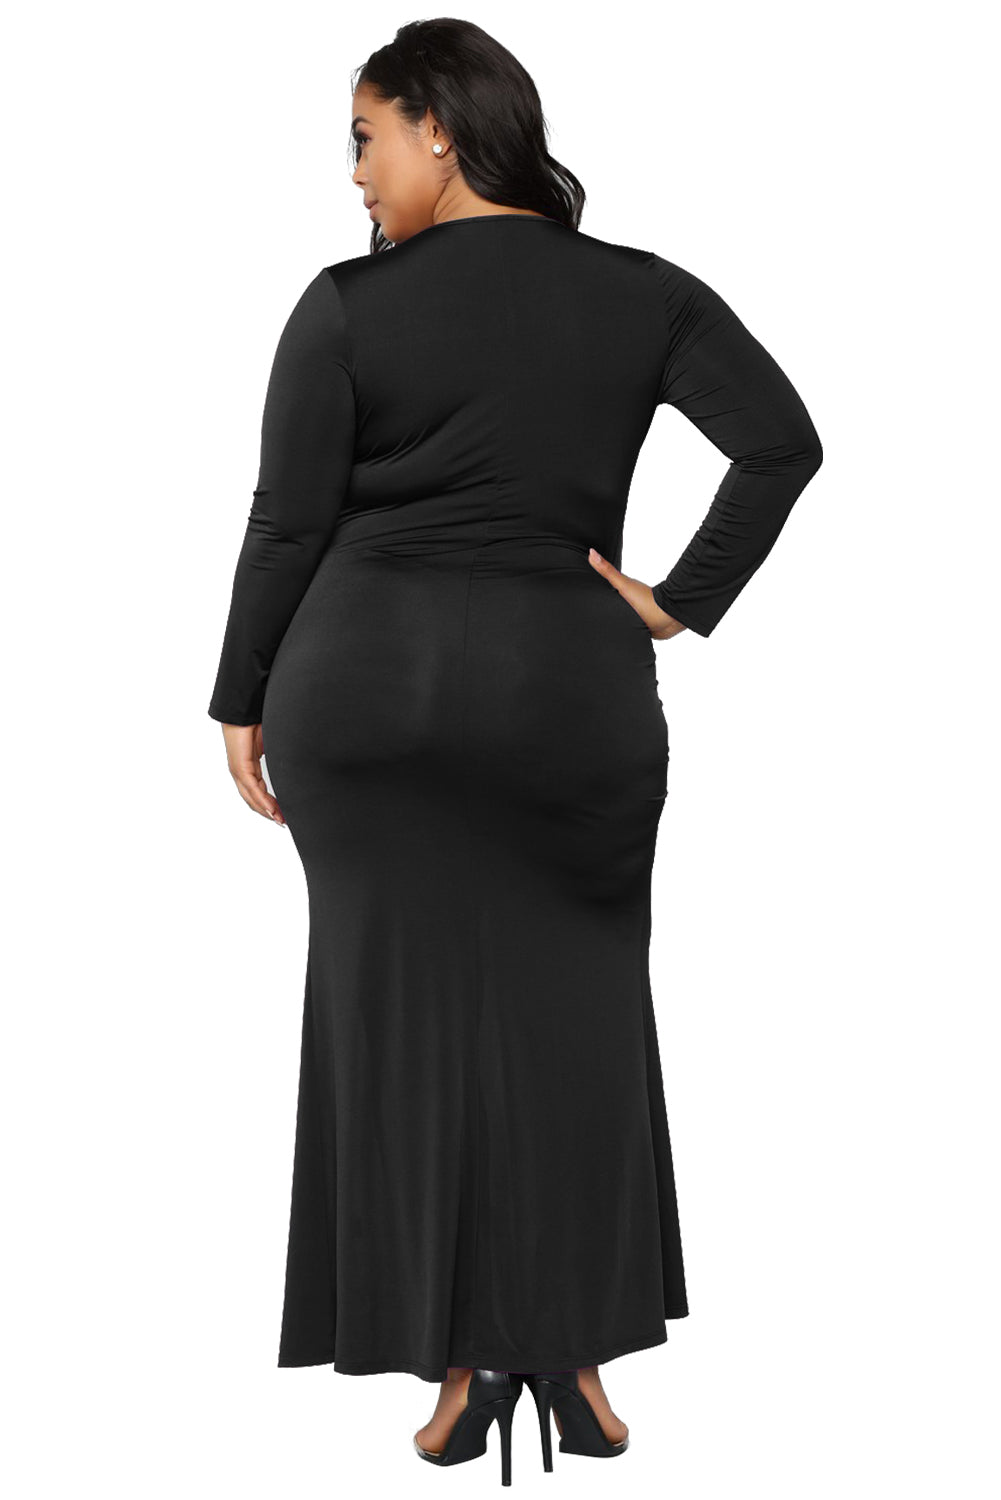 Surplice Long Sleeve Plus Size Dress ( Black, Purple)